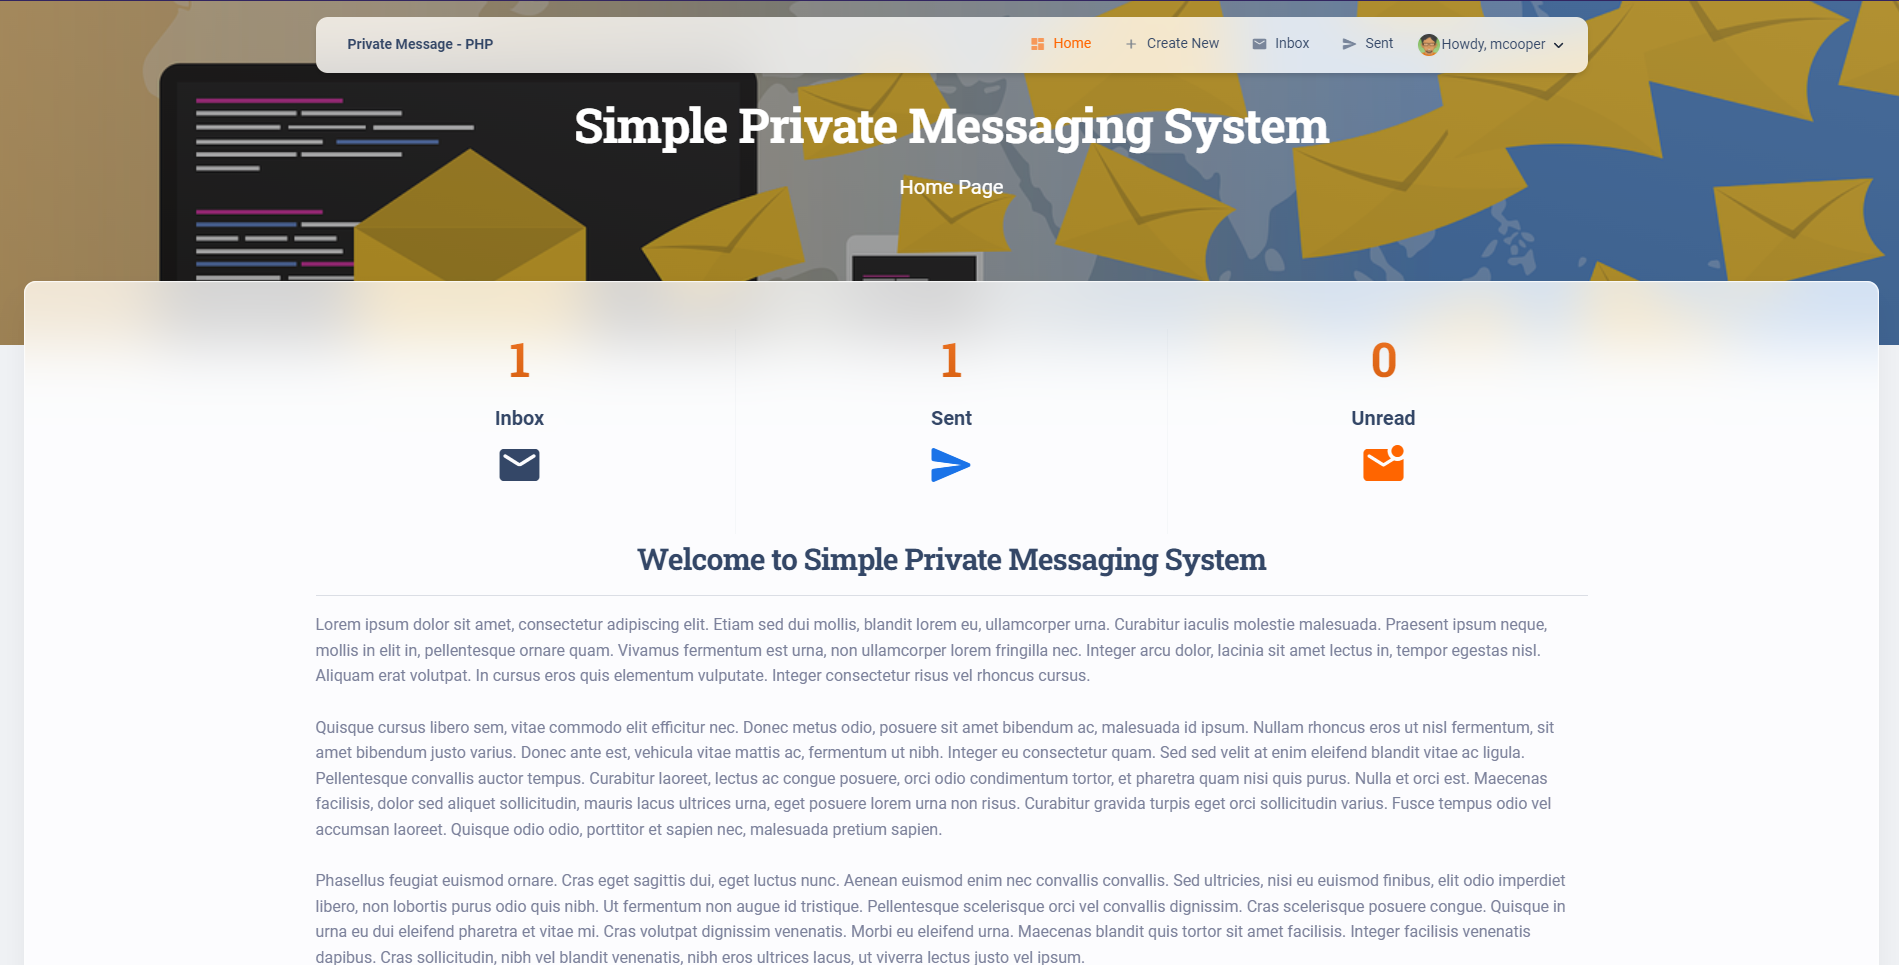 Messaging System